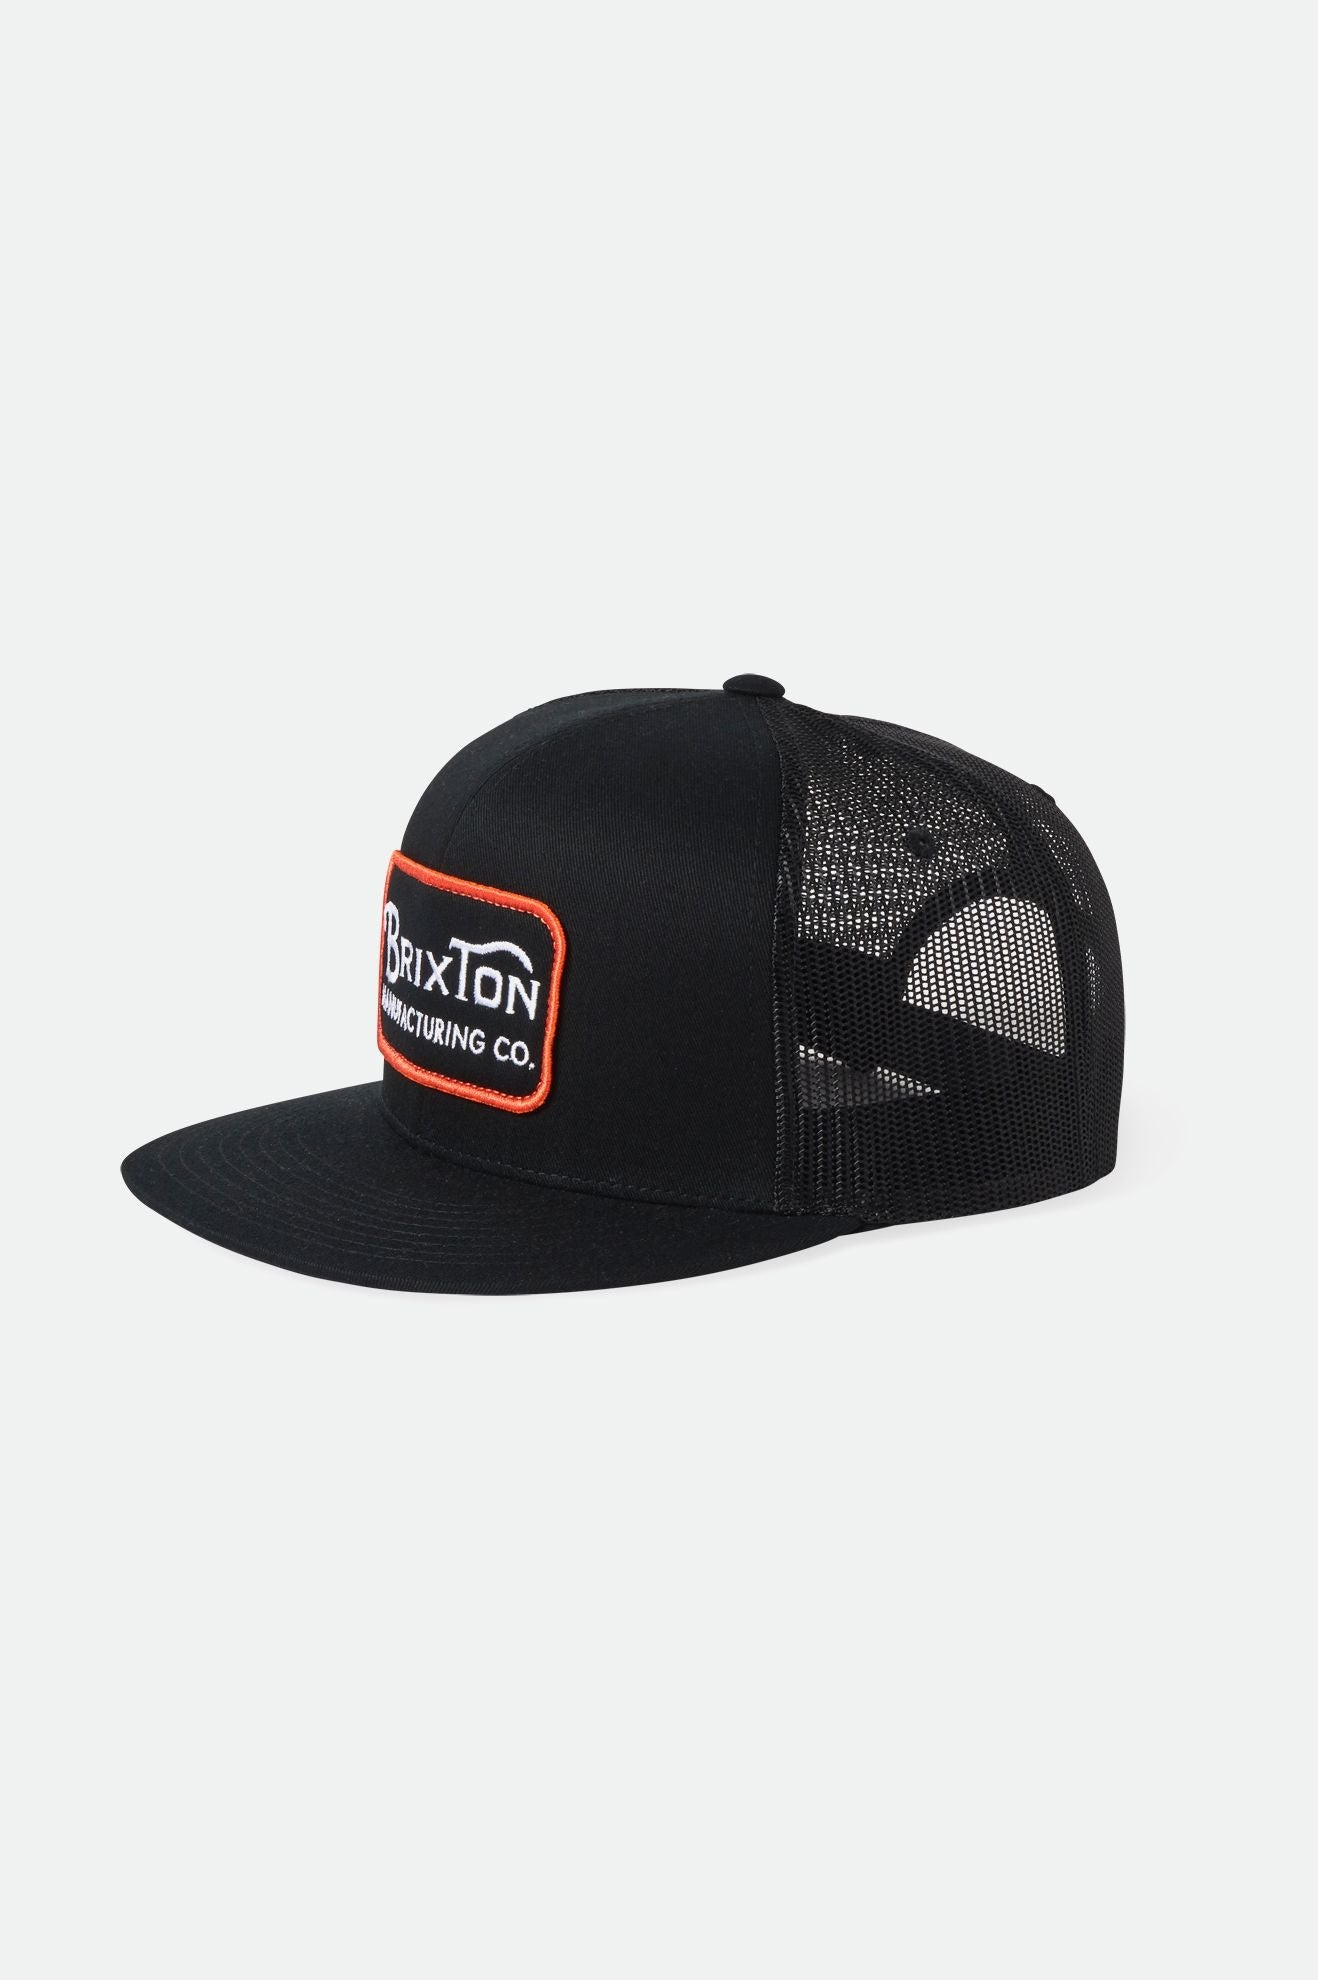 Brixton Men's Grade HP Trucker Hat - Black/Orange/White | Profile